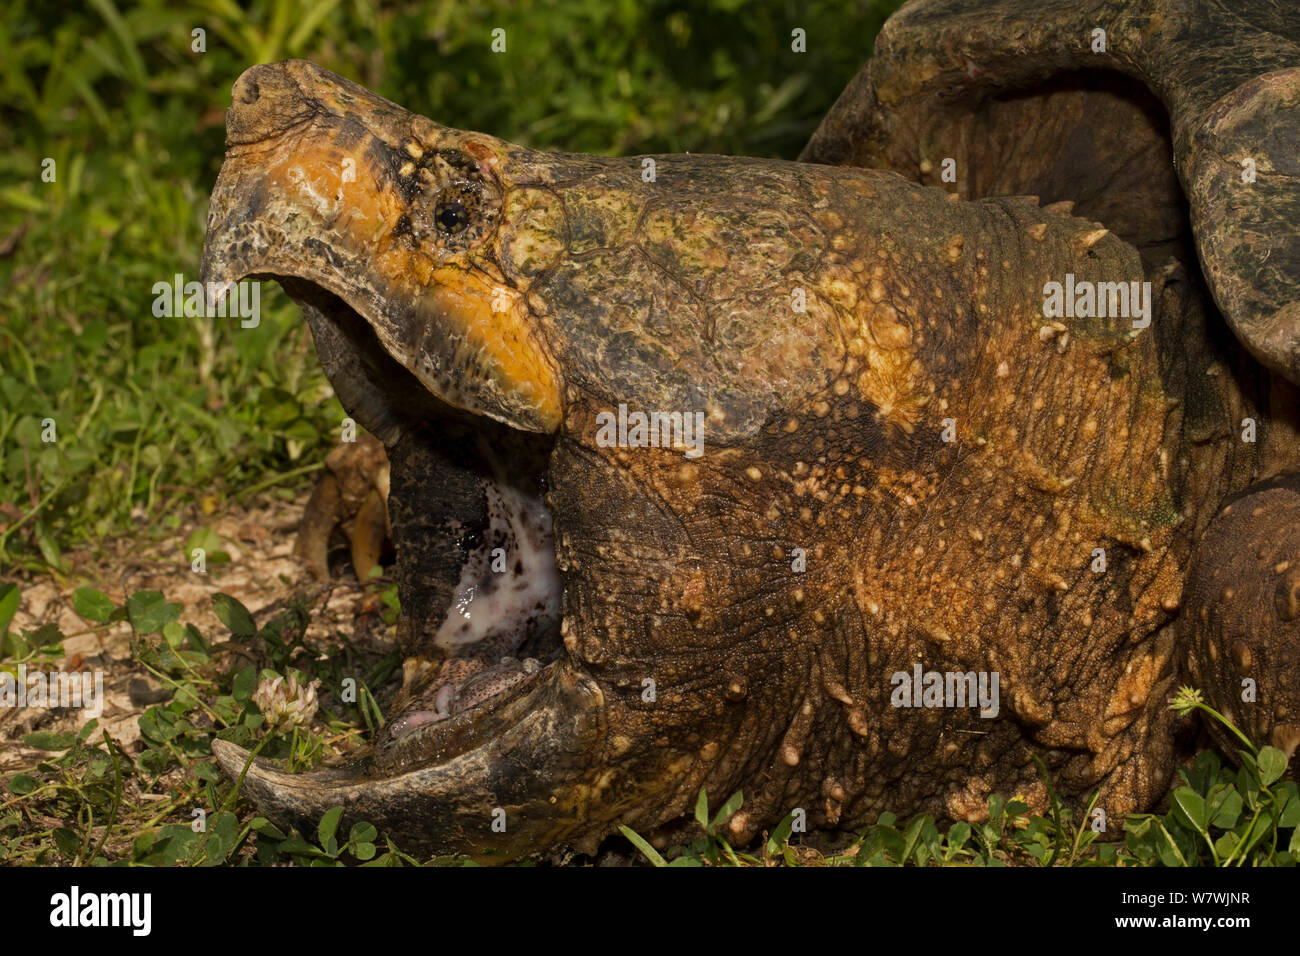 Alligator snapping Turtle (Macrochelys temminckii) Kopf hoch, Mund weit geöffnet, Louisiana, USA, April. Gefährdete Arten. Stockfoto